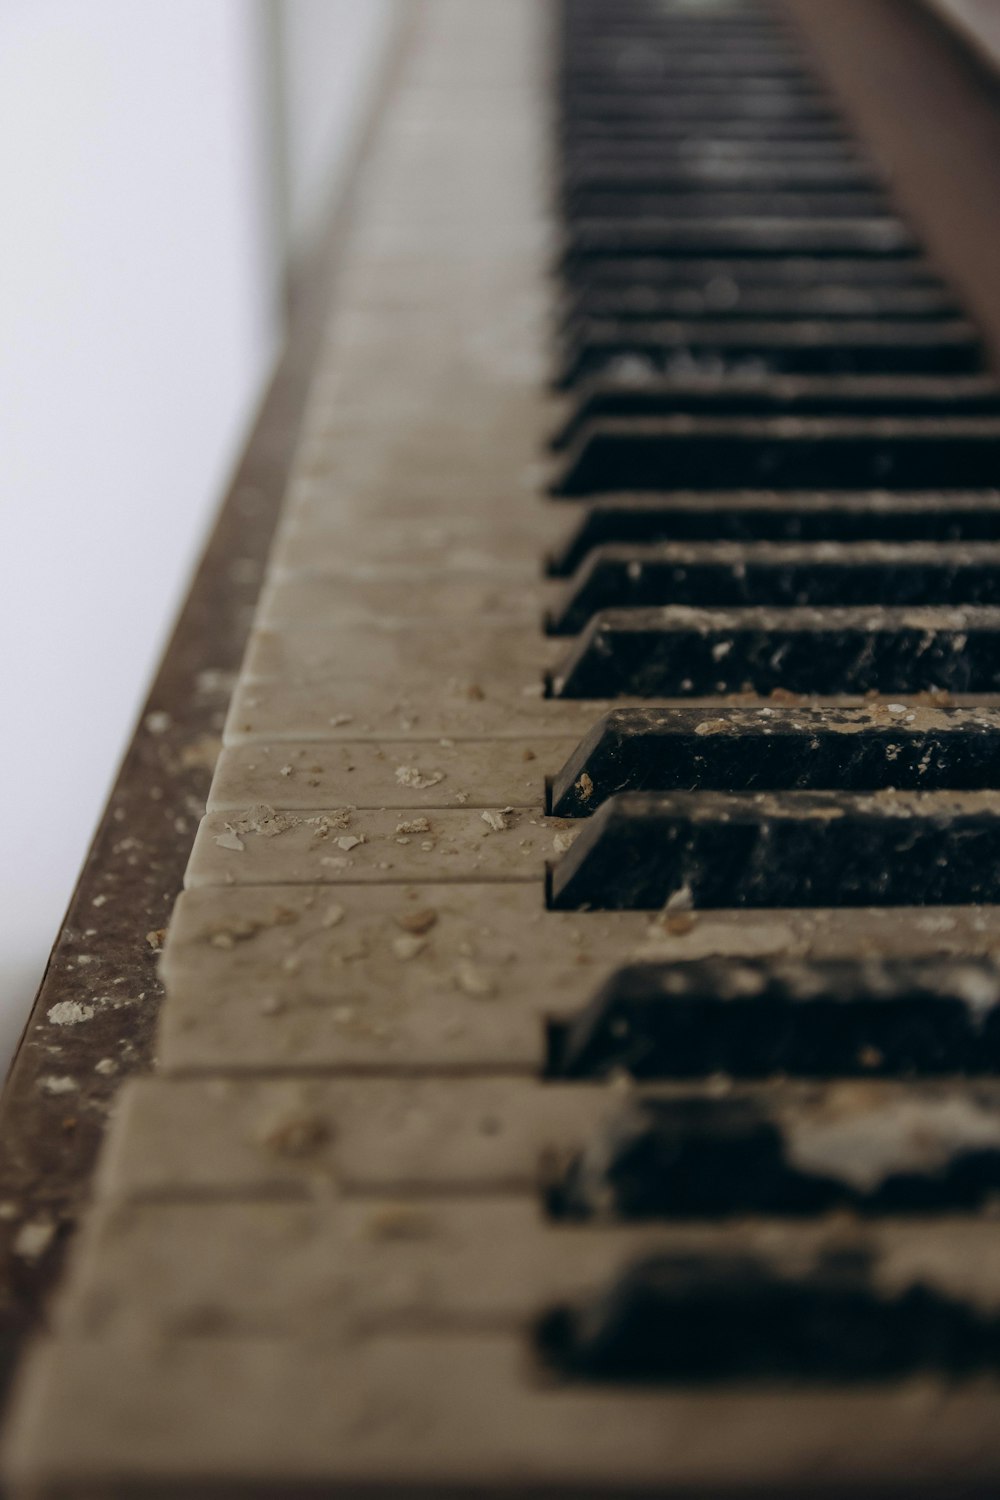 teclas de piano em preto e branco